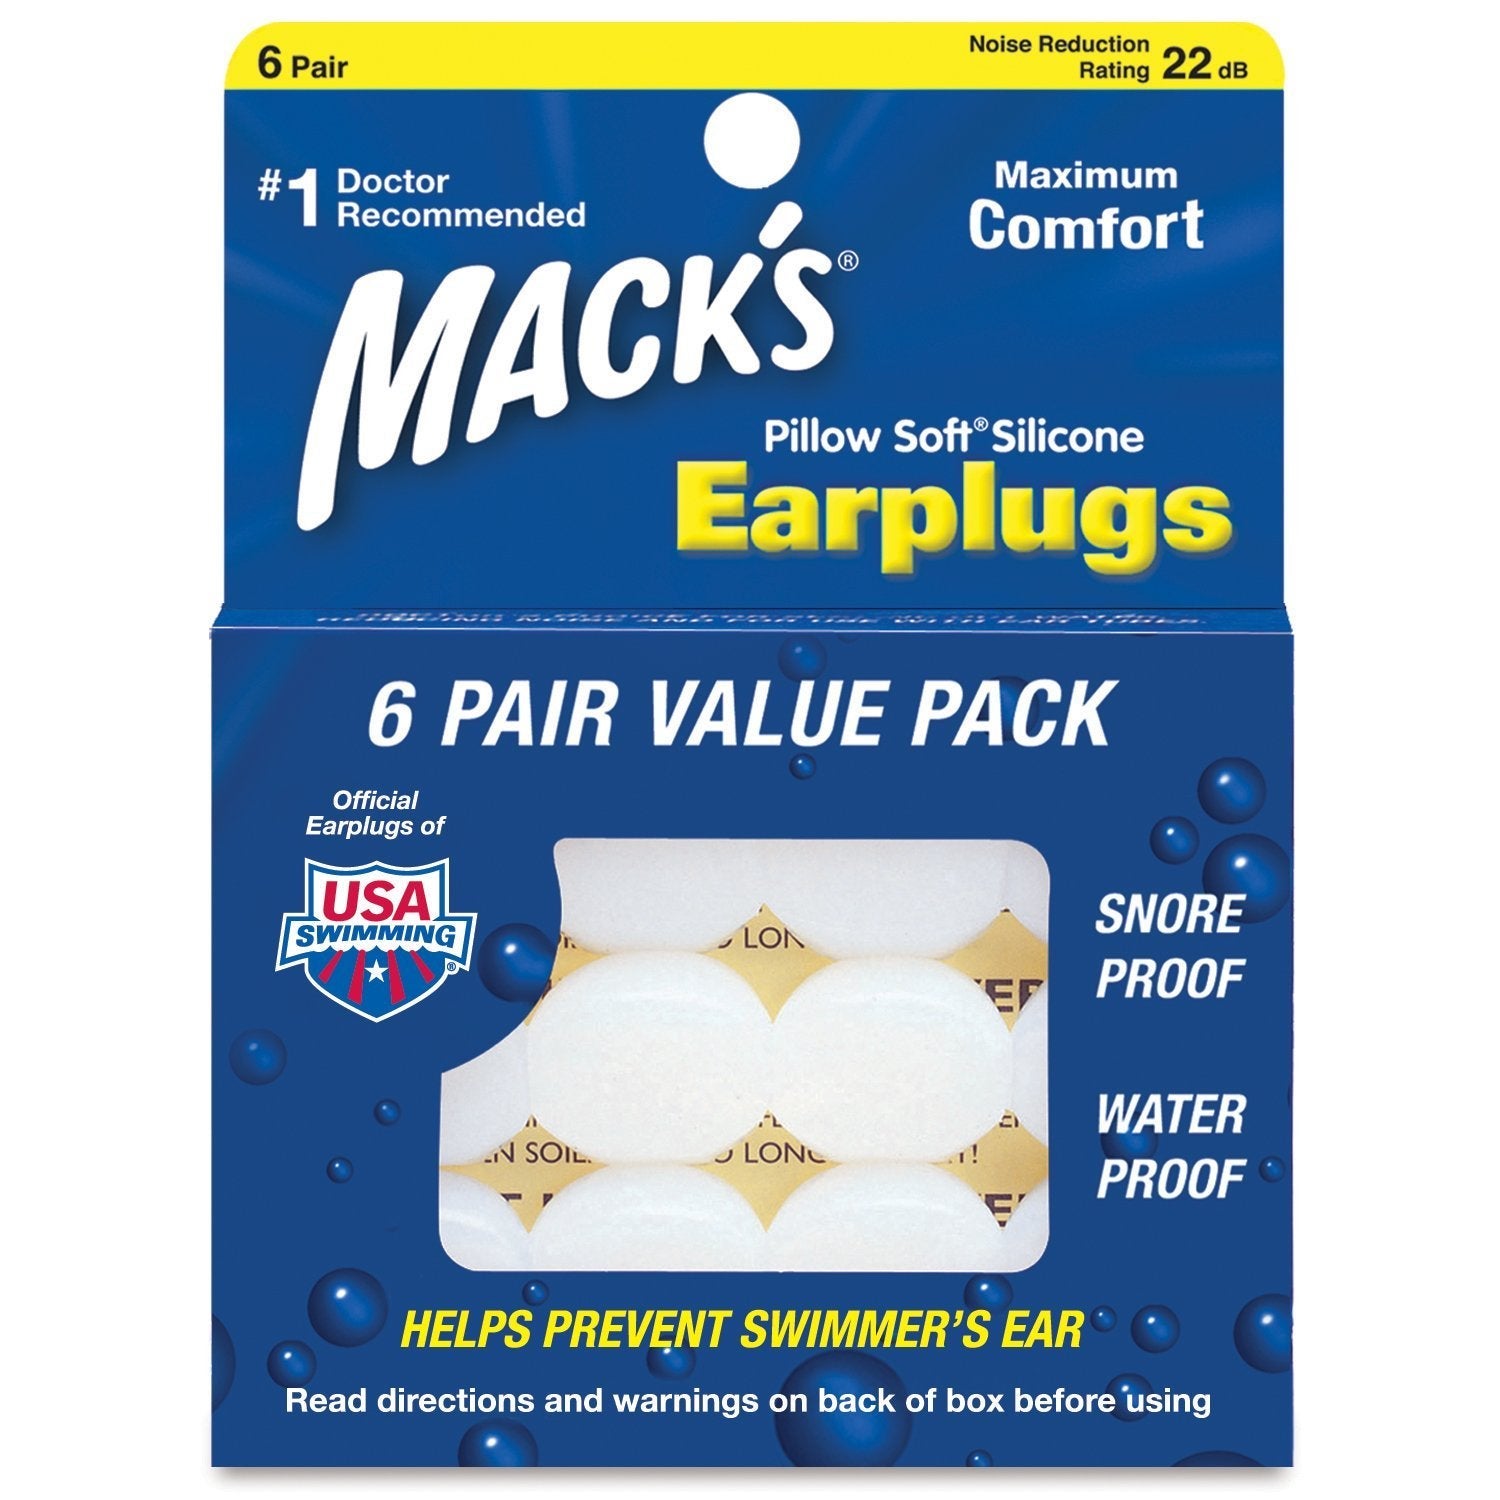 SEFUDUN Ear Covers for Shower 60 pcs ,Waterproof Ear Protector